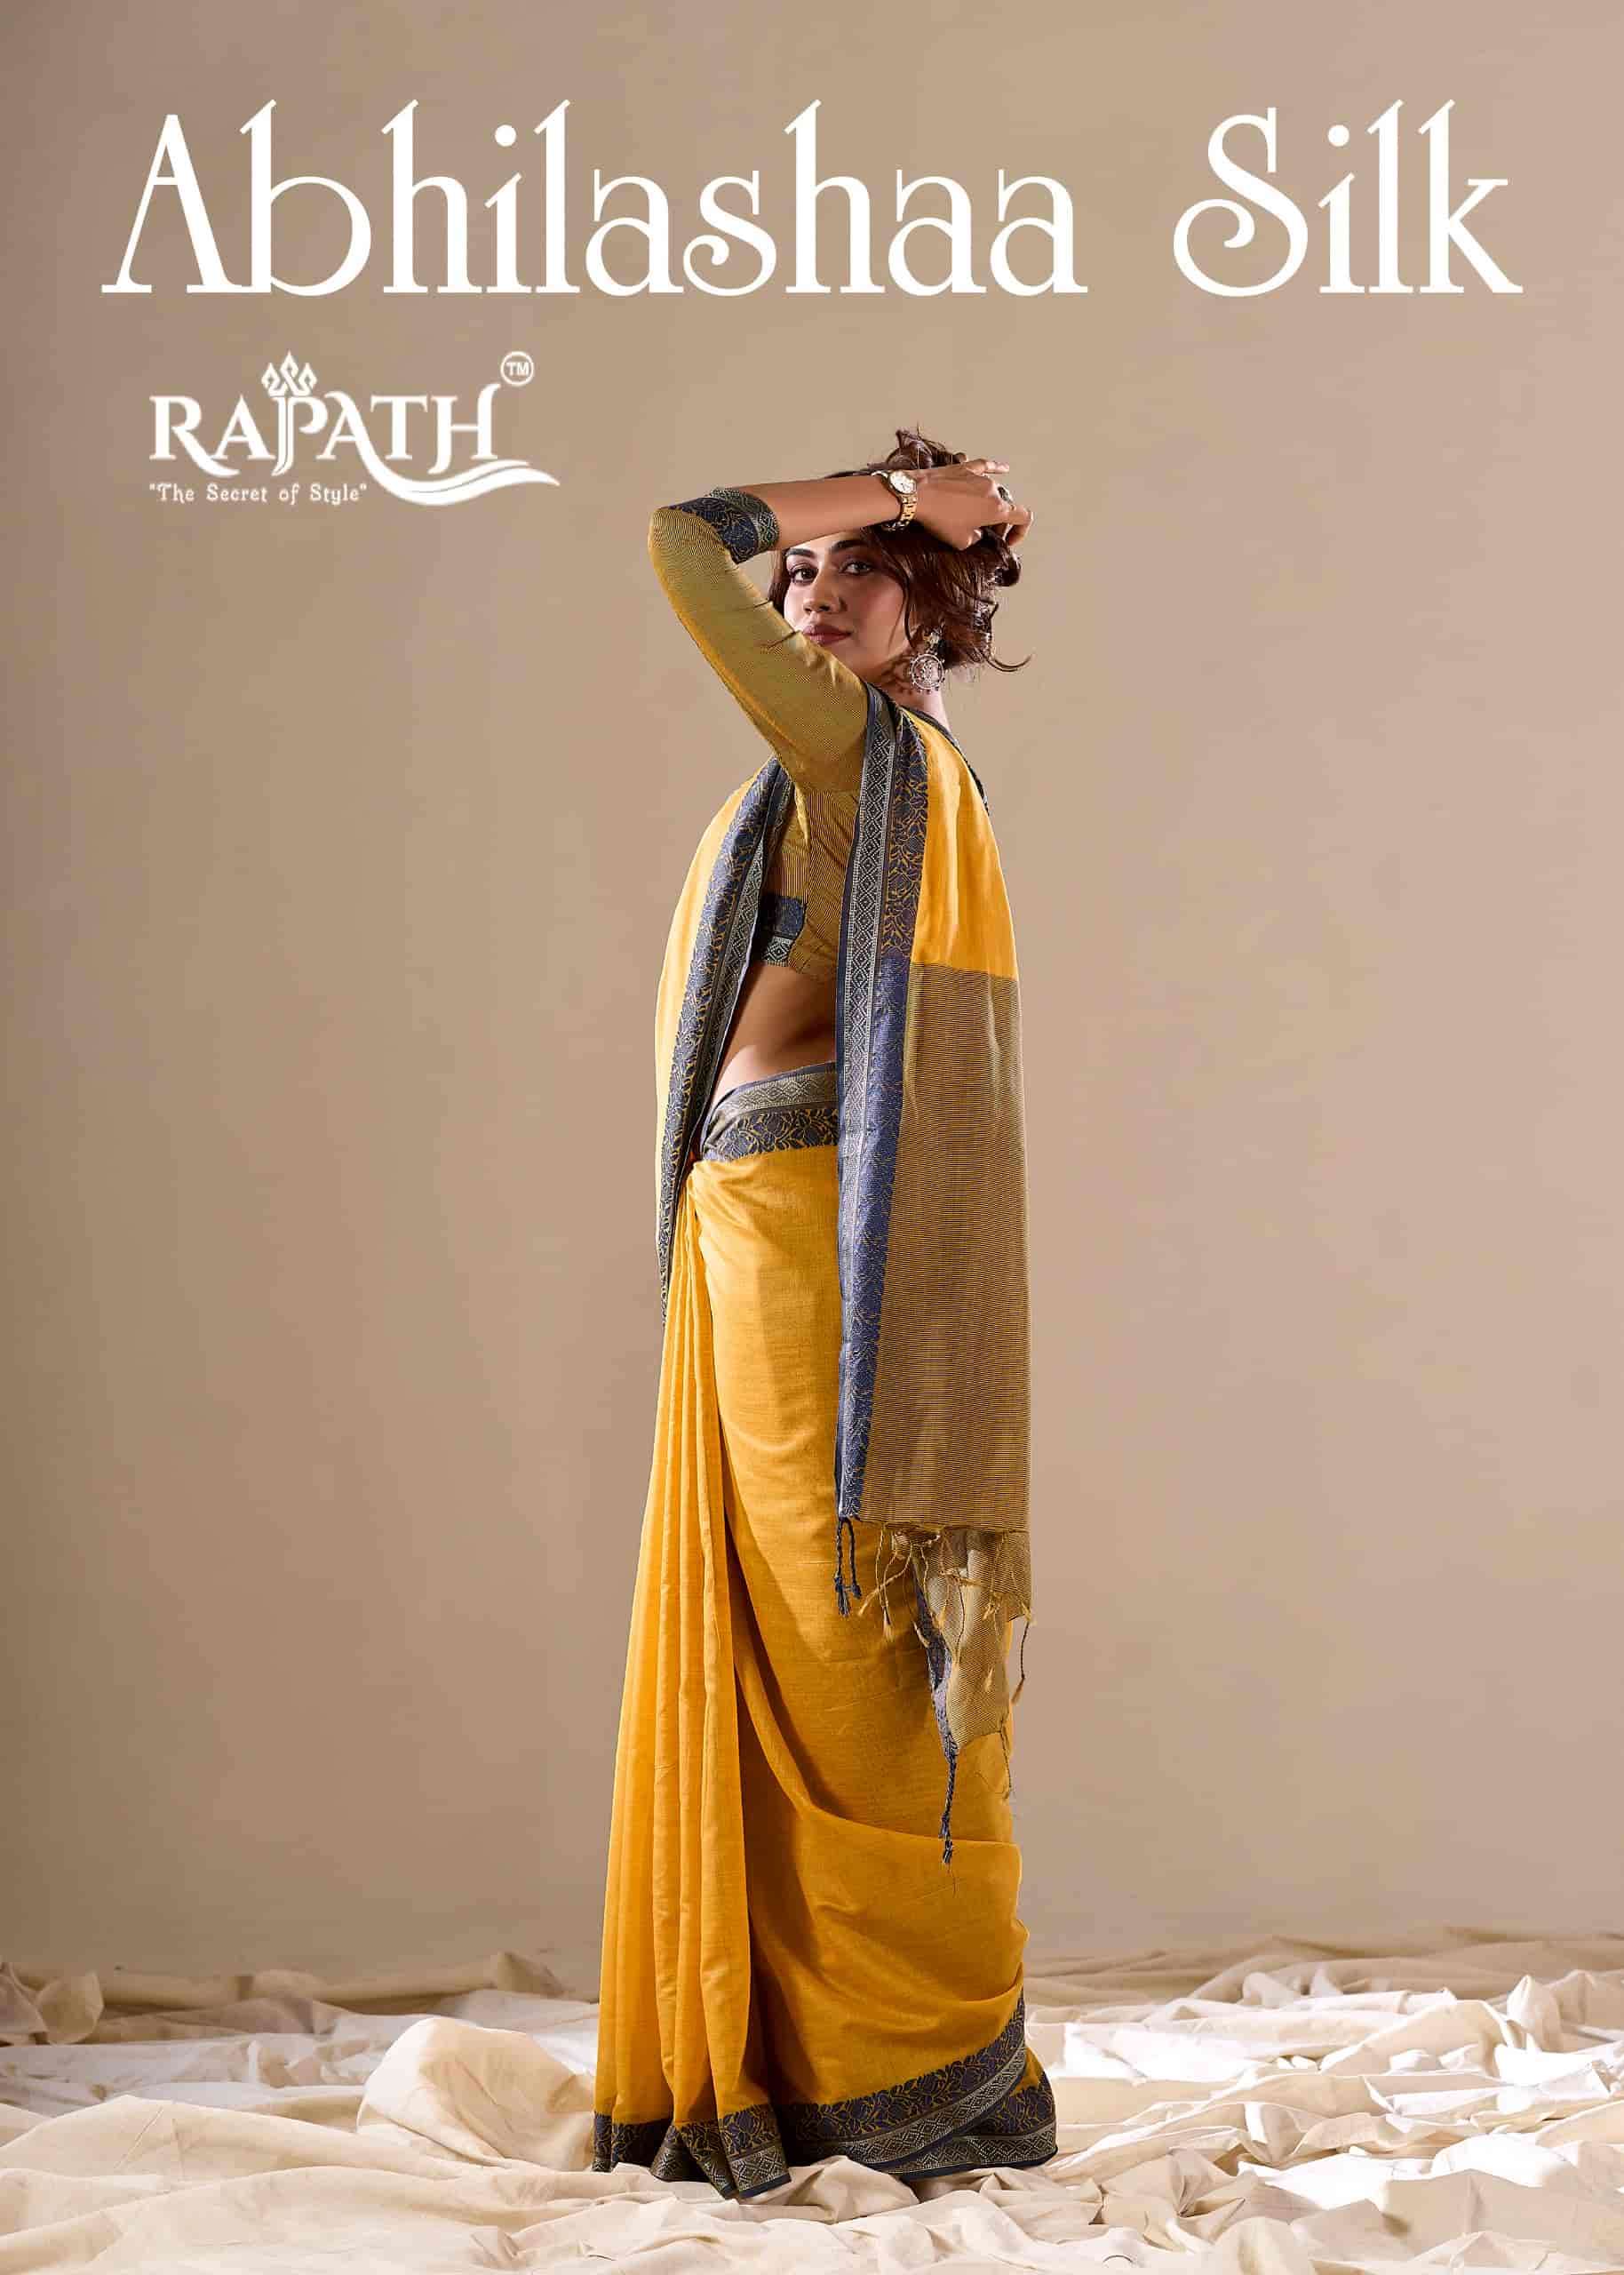 Rajpath Abhilasha Silk 530001 To 530006 Ethnic Wear Indian Saree Catalog Collection